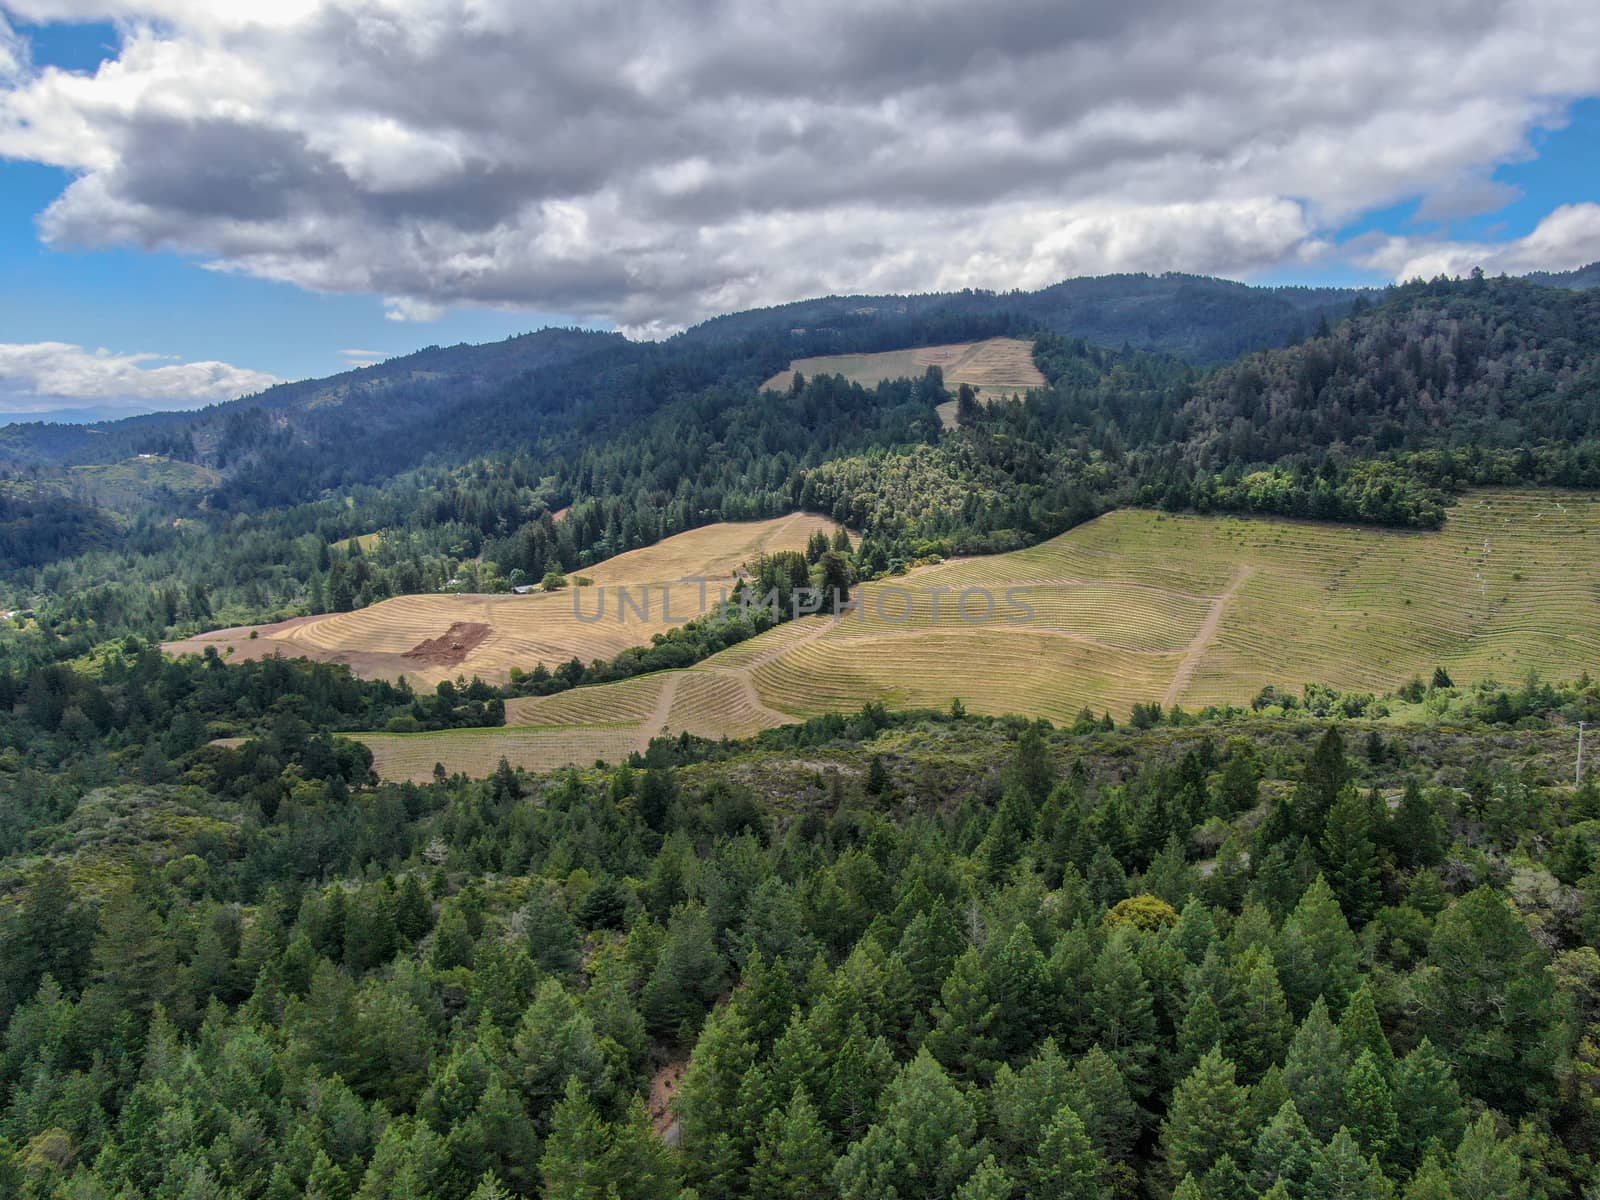 Aerial view of Napa Valley vineyard landscape  by Bonandbon